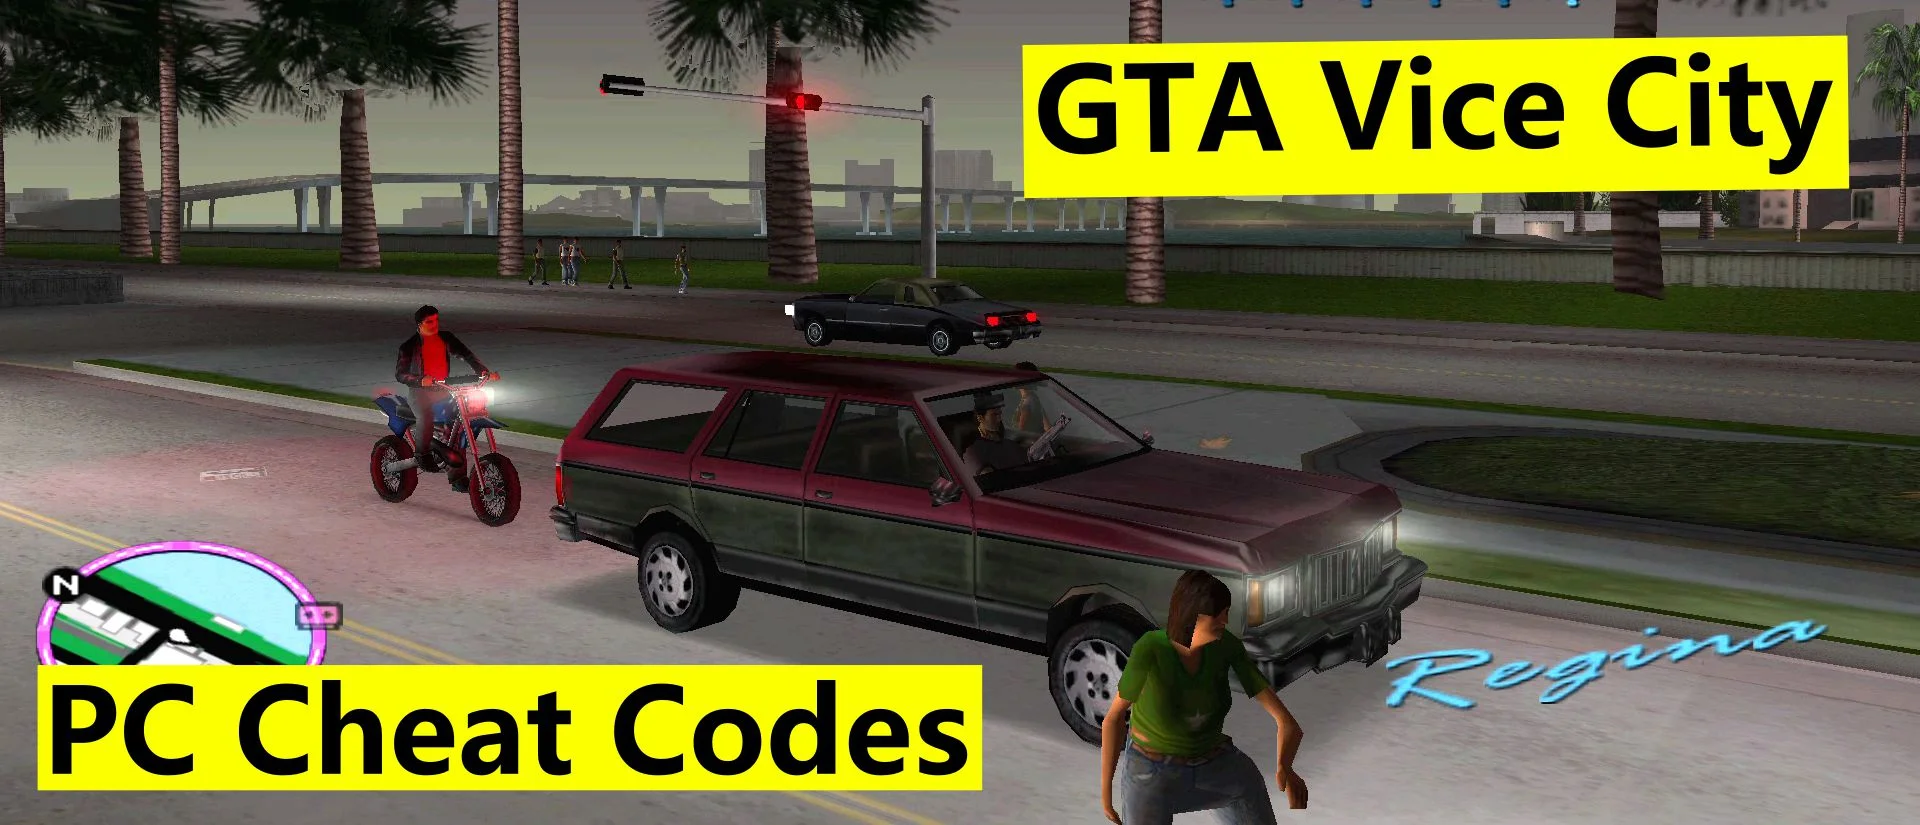 GTA 5 cheats PC PDF download link